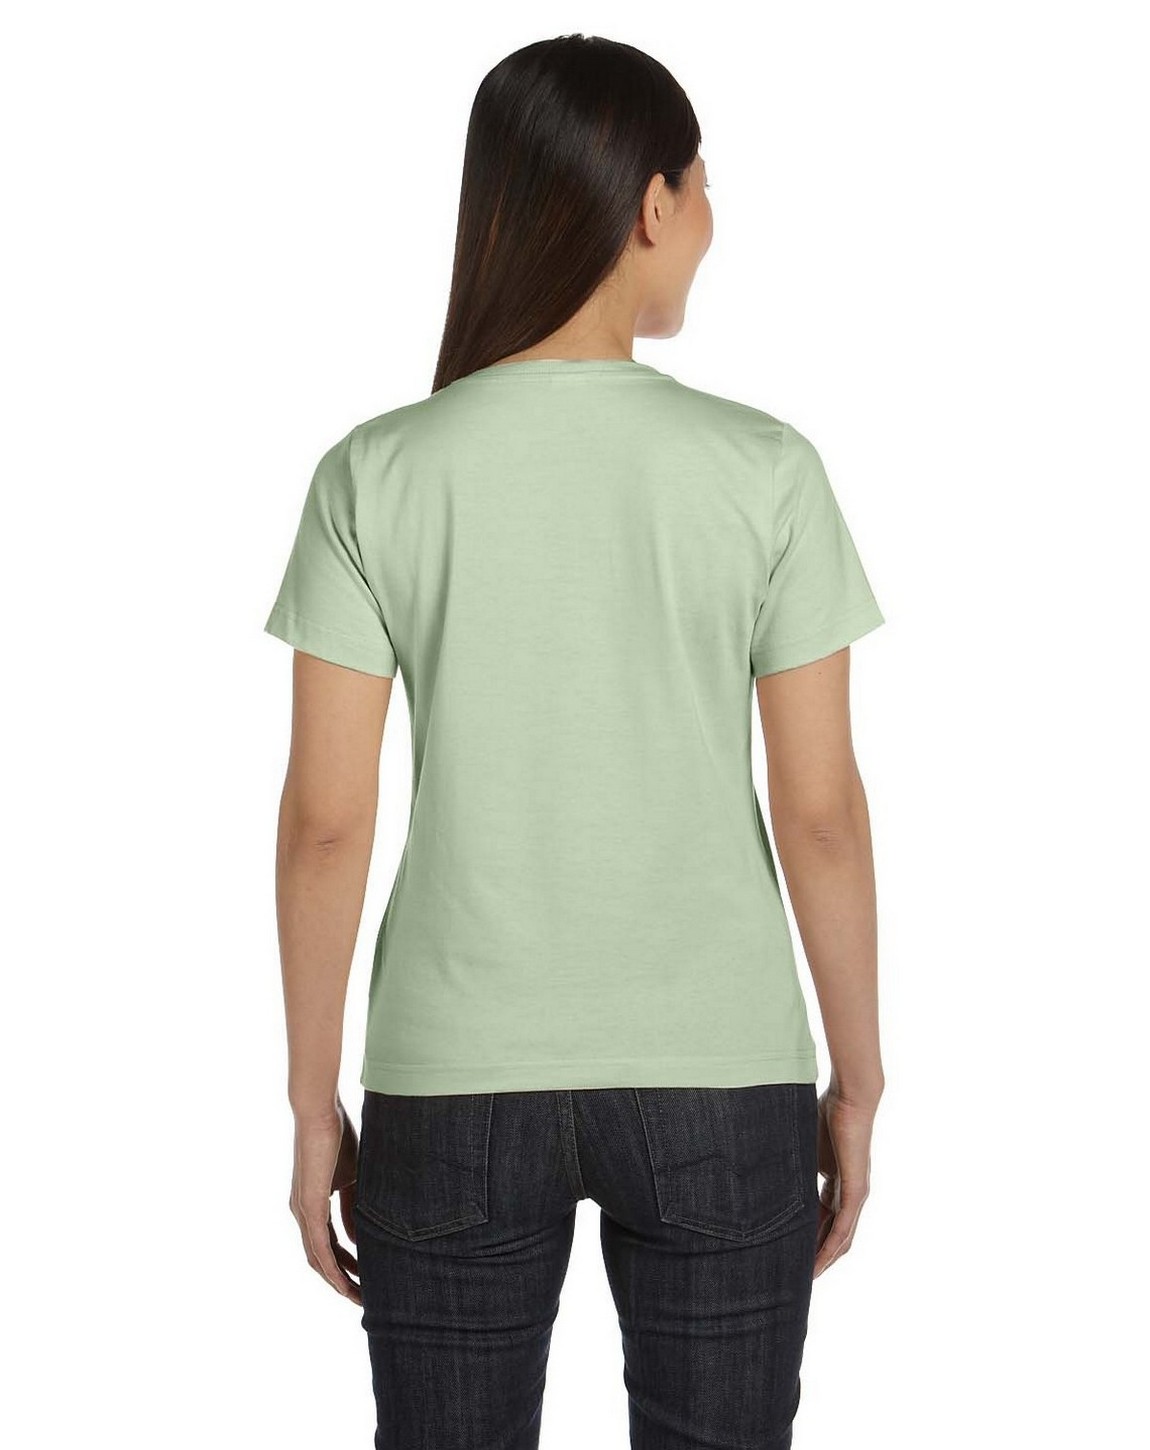 LAT 3580 Women Ringspun Scoop Neck T-Shirt - ApparelnBags.com